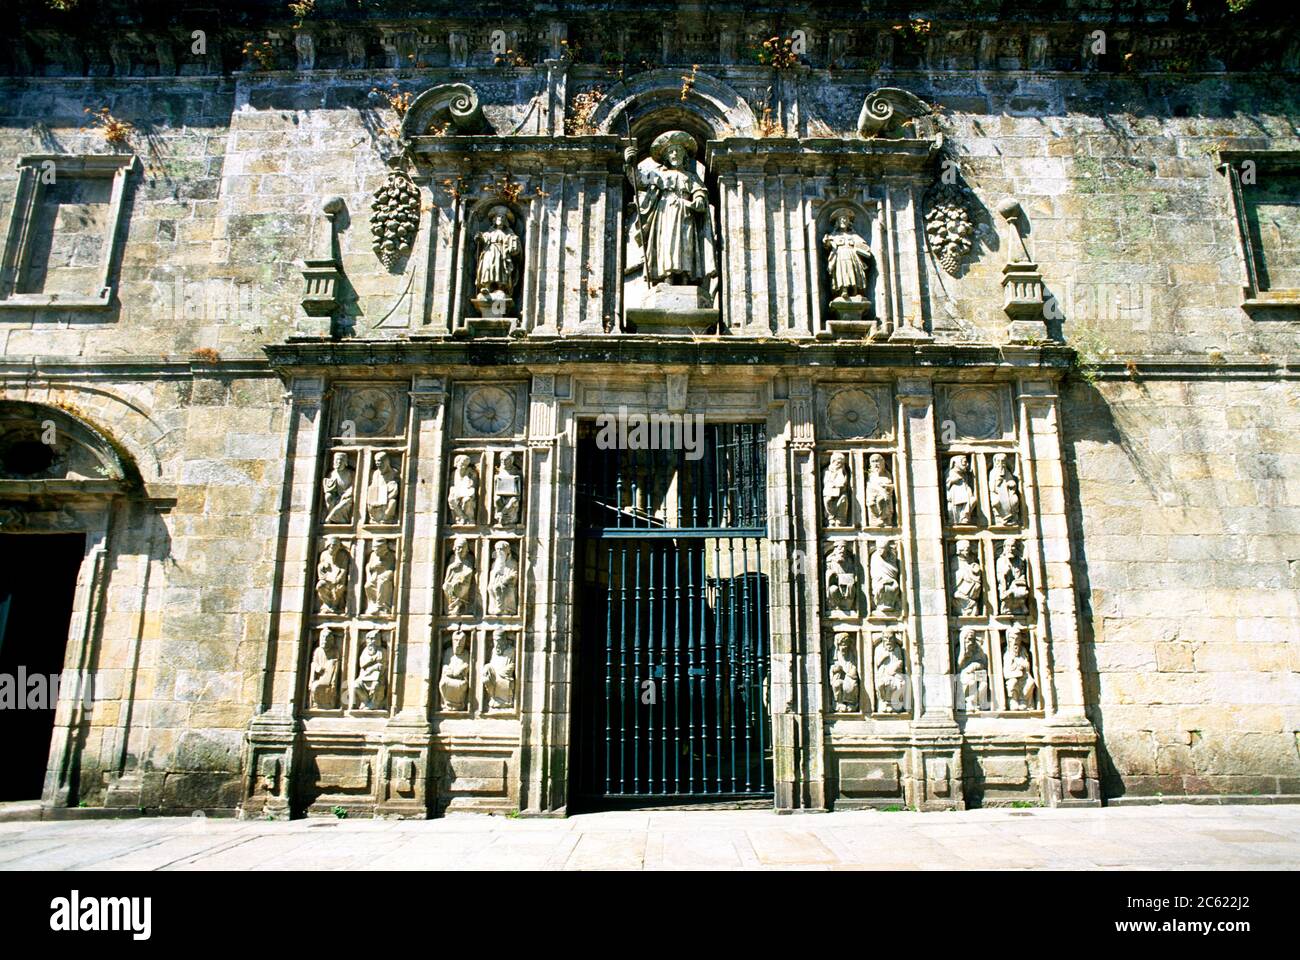 Porta de camino santiago de compostela hi-res stock photography and images  - Alamy